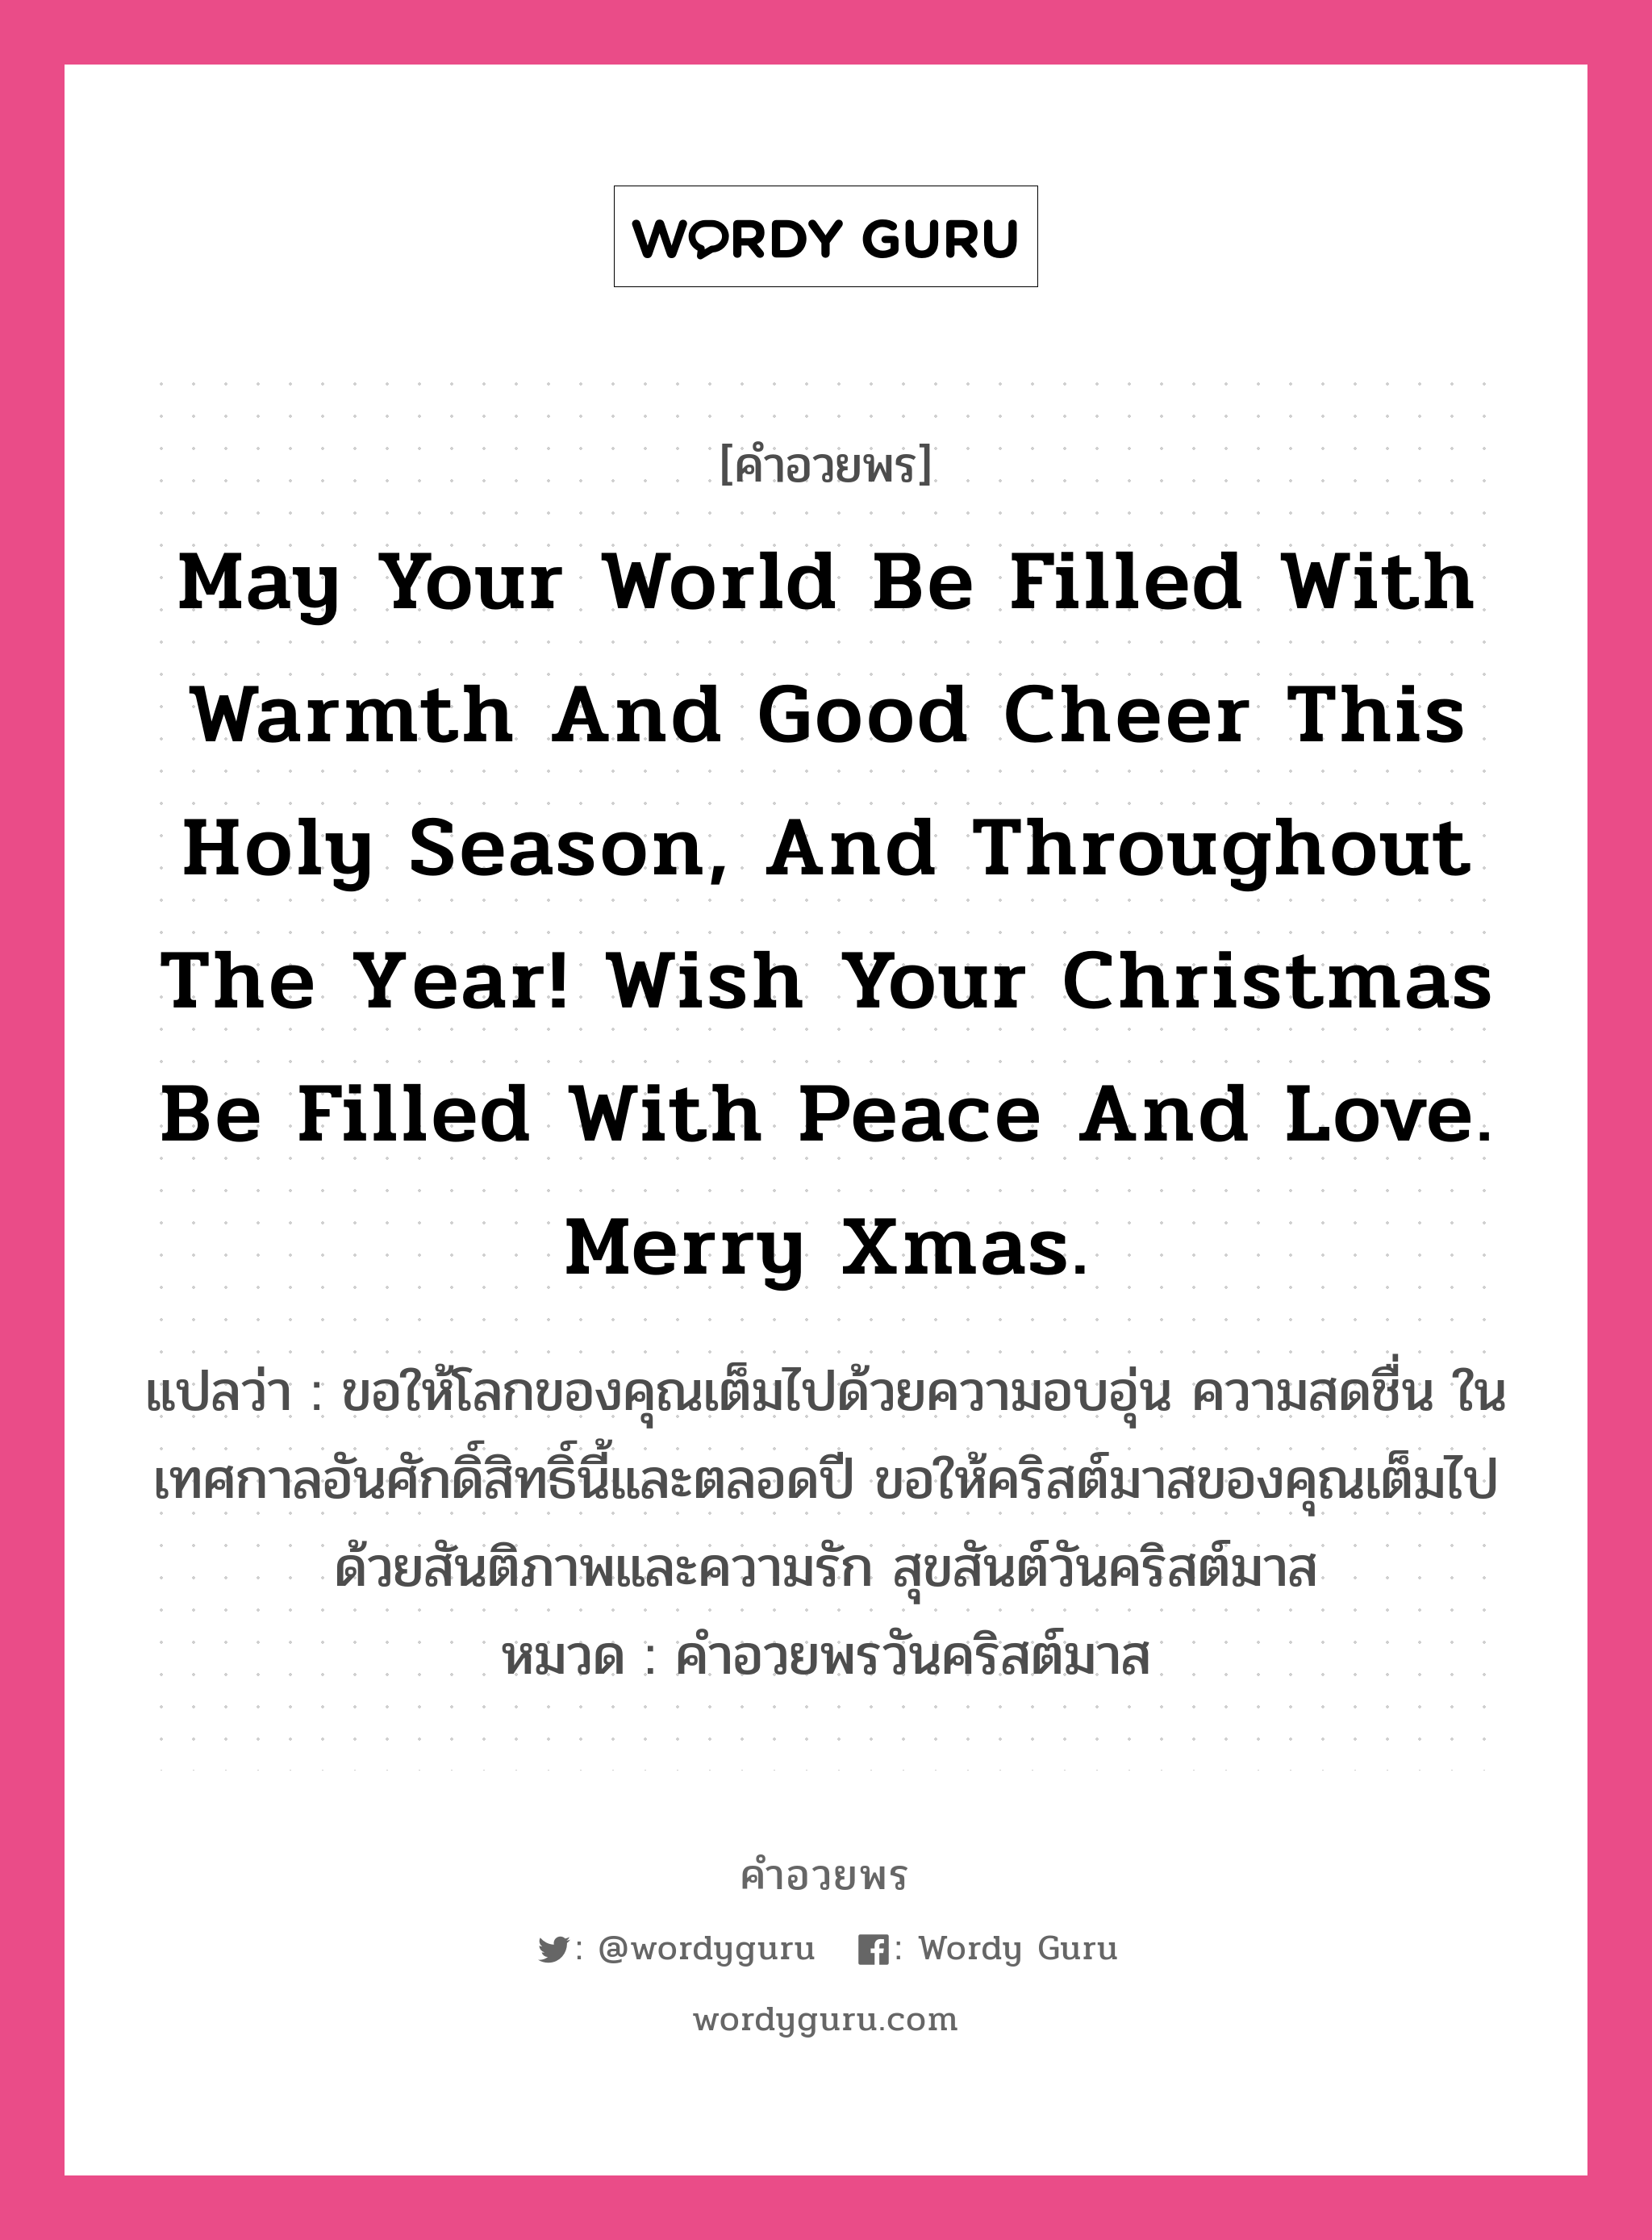 May your world be filled with warmth and good cheer this Holy season, and throughout the year! Wish your Christmas be filled with peace and love. Merry Xmas. คำศัพท์ในกลุ่มประเภท คำอวยพรวันคริสต์มาส, แปลว่า ขอให้โลกของคุณเต็มไปด้วยความอบอุ่น ความสดชื่น ในเทศกาลอันศักดิ์สิทธิ์นี้และตลอดปี ขอให้คริสต์มาสของคุณเต็มไปด้วยสันติภาพและความรัก สุขสันต์วันคริสต์มาส หมวด คำอวยพรวันคริสต์มาส หมวด คำอวยพรวันคริสต์มาส